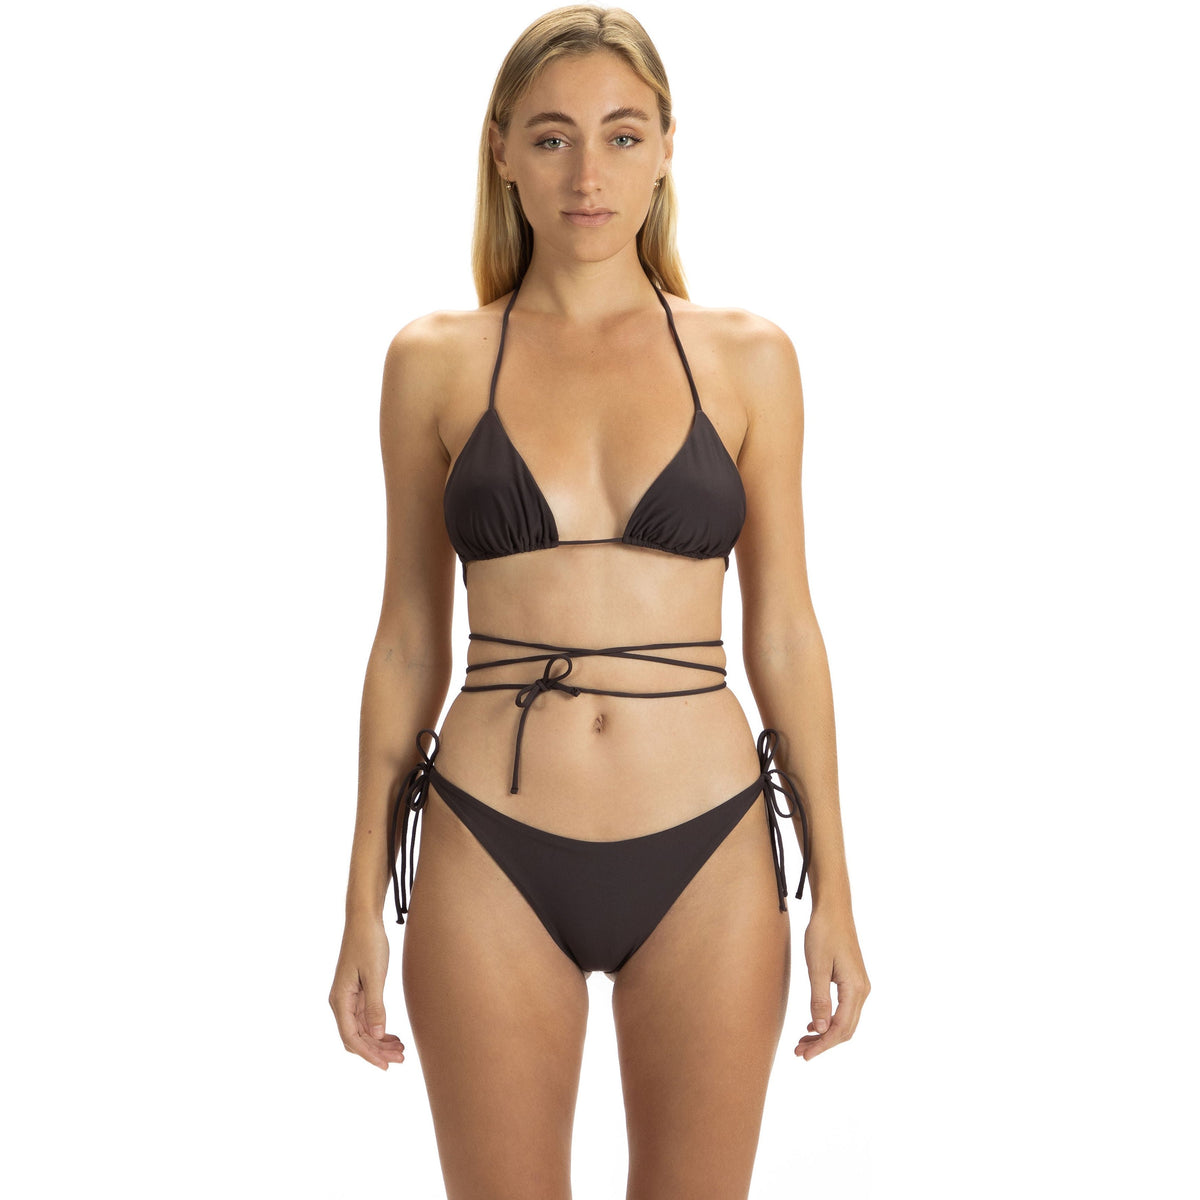 Tied-up bikini set - Brown